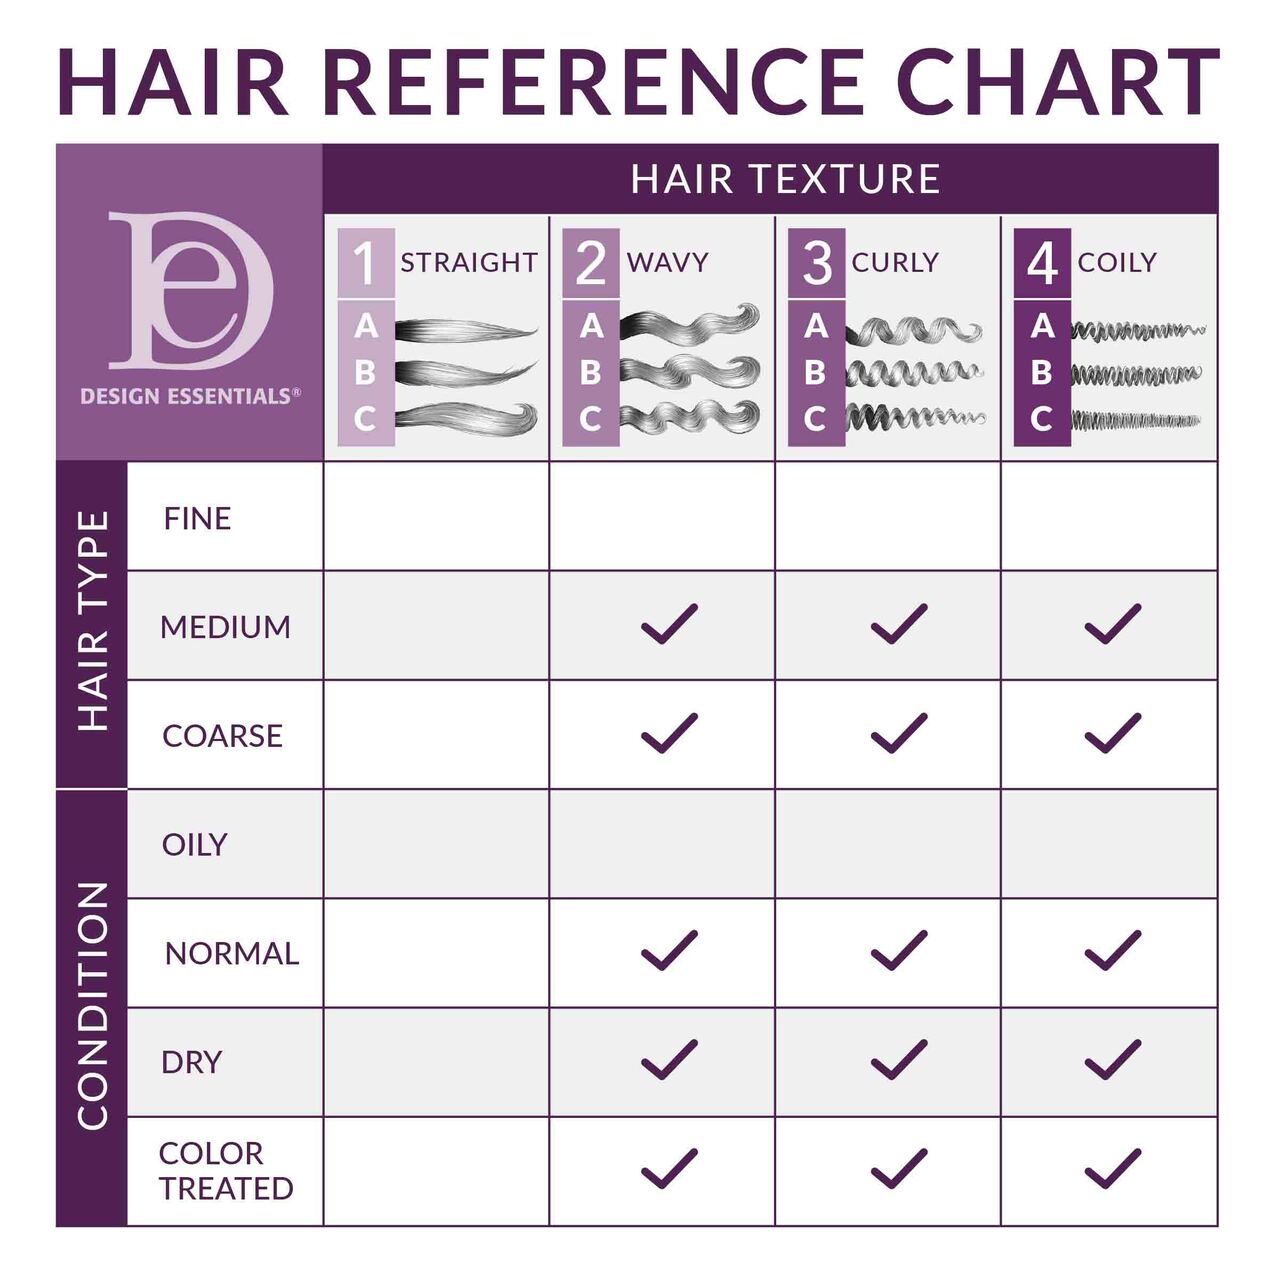 Moisturizing_Oil_Treatment_-_Hair_Reference_Chart__85521.1616642444